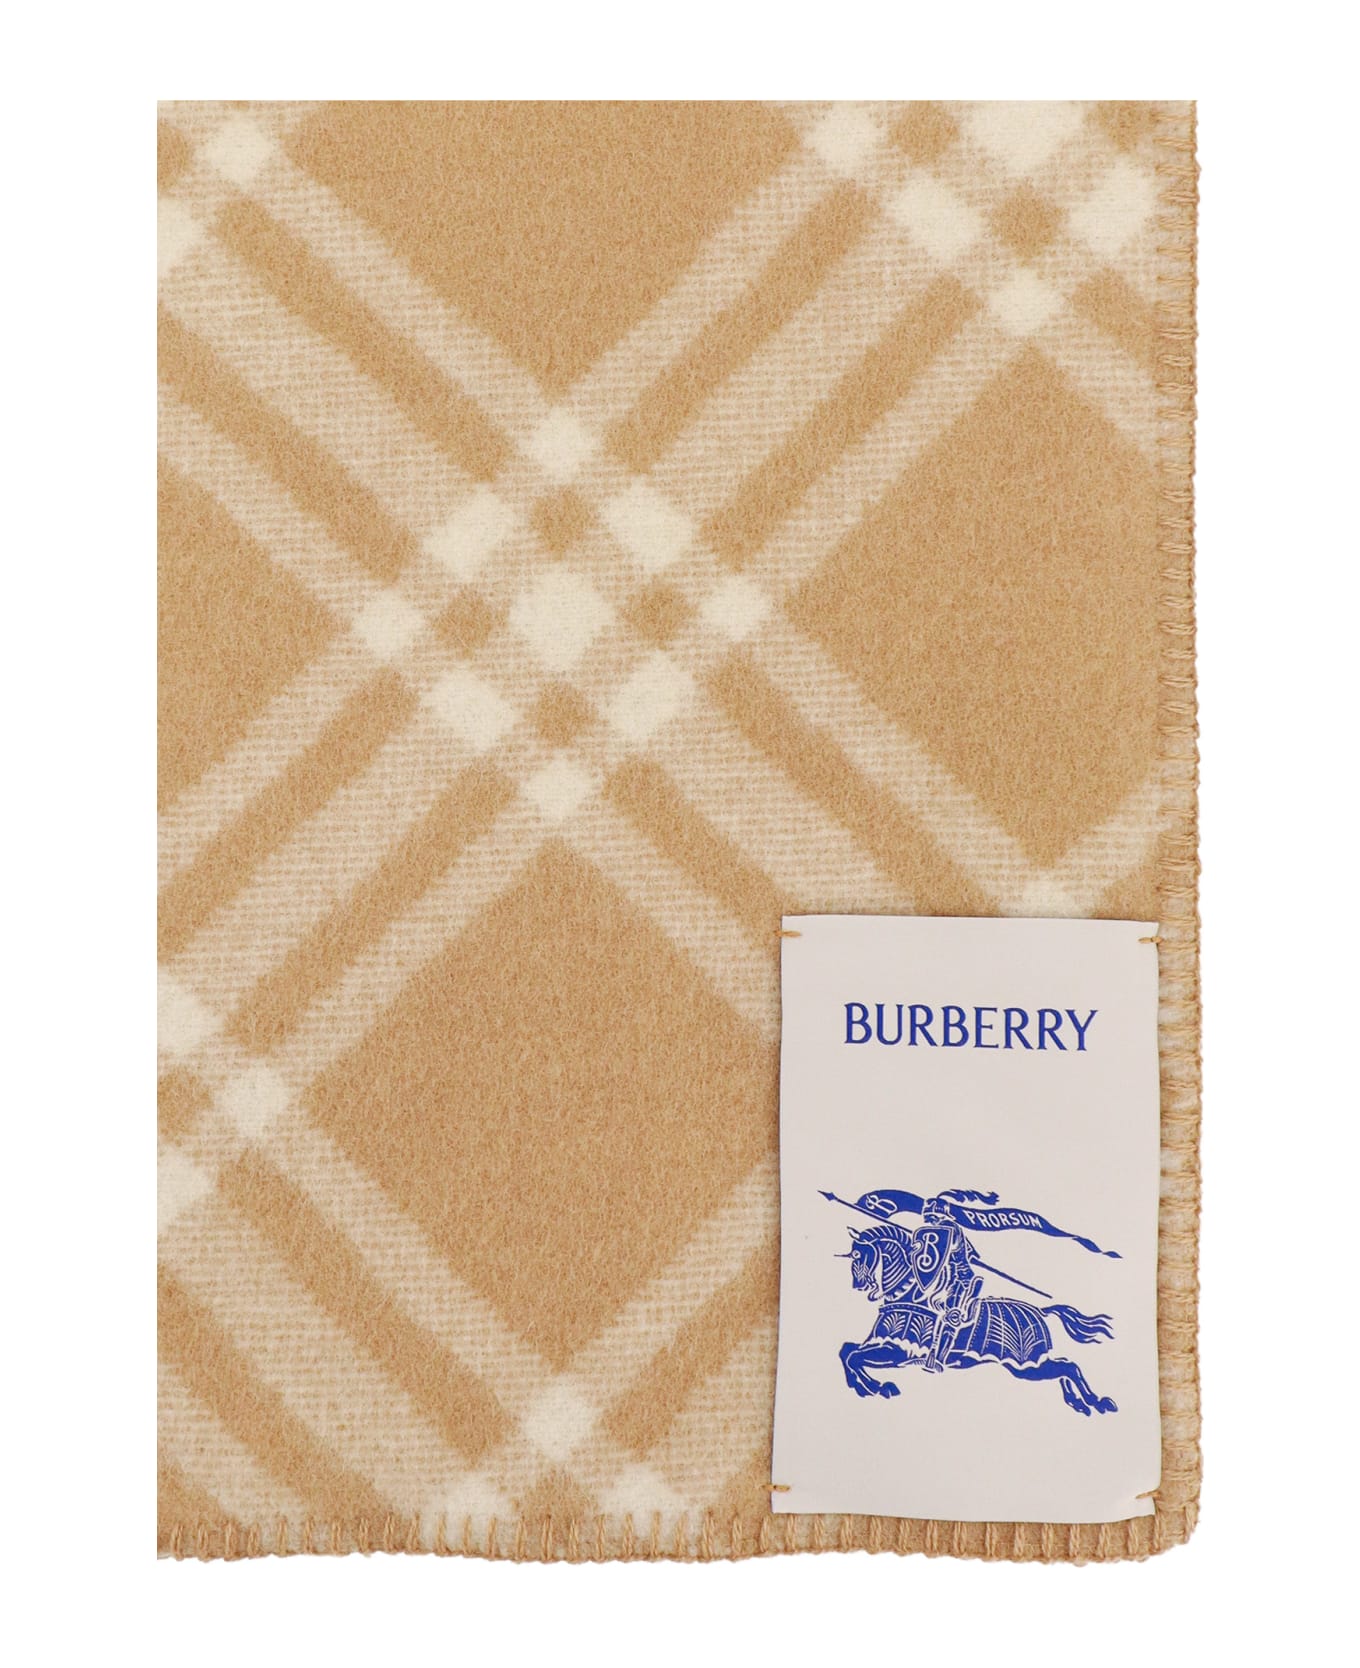 Burberry Scarf - Beige スカーフ